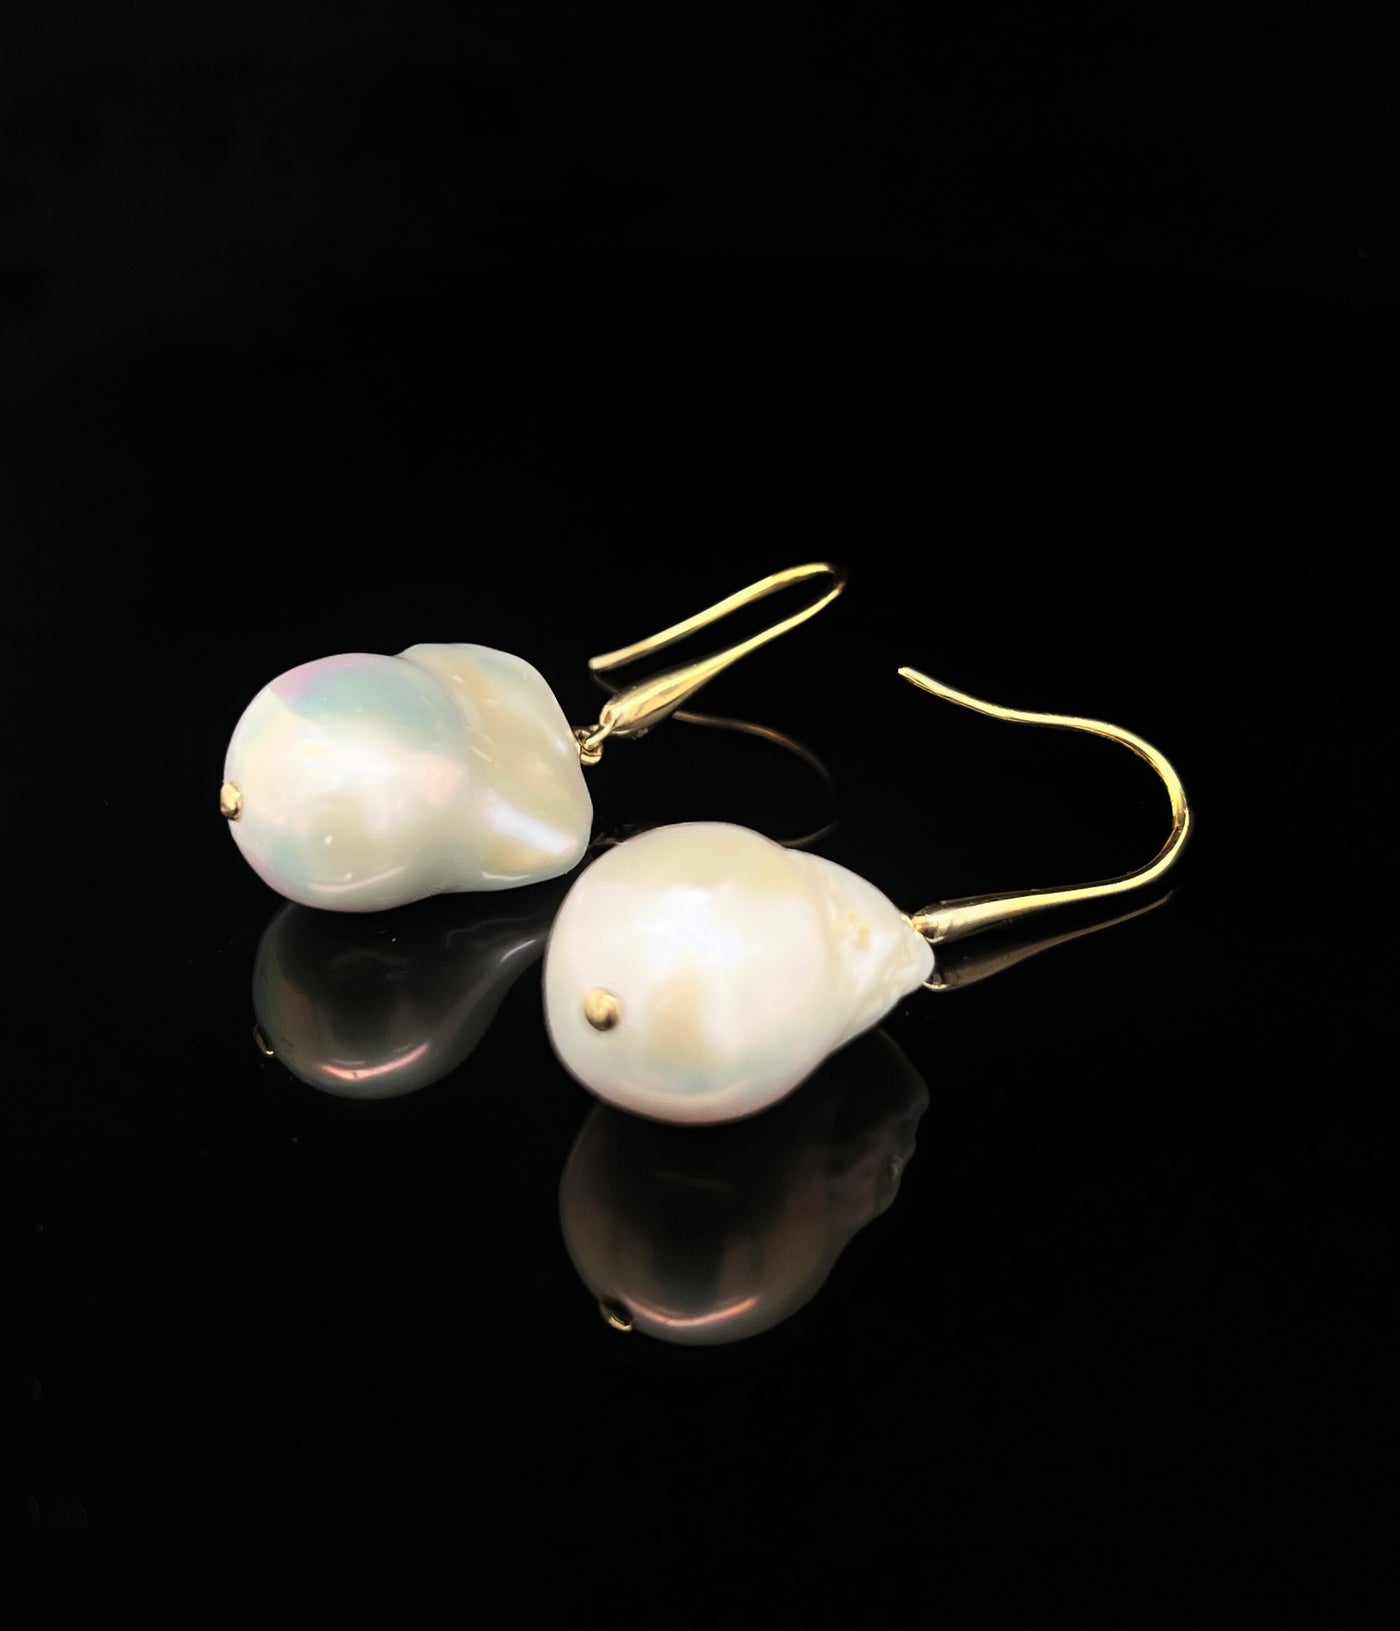 White Baroque Freshwater Pearl Earrings